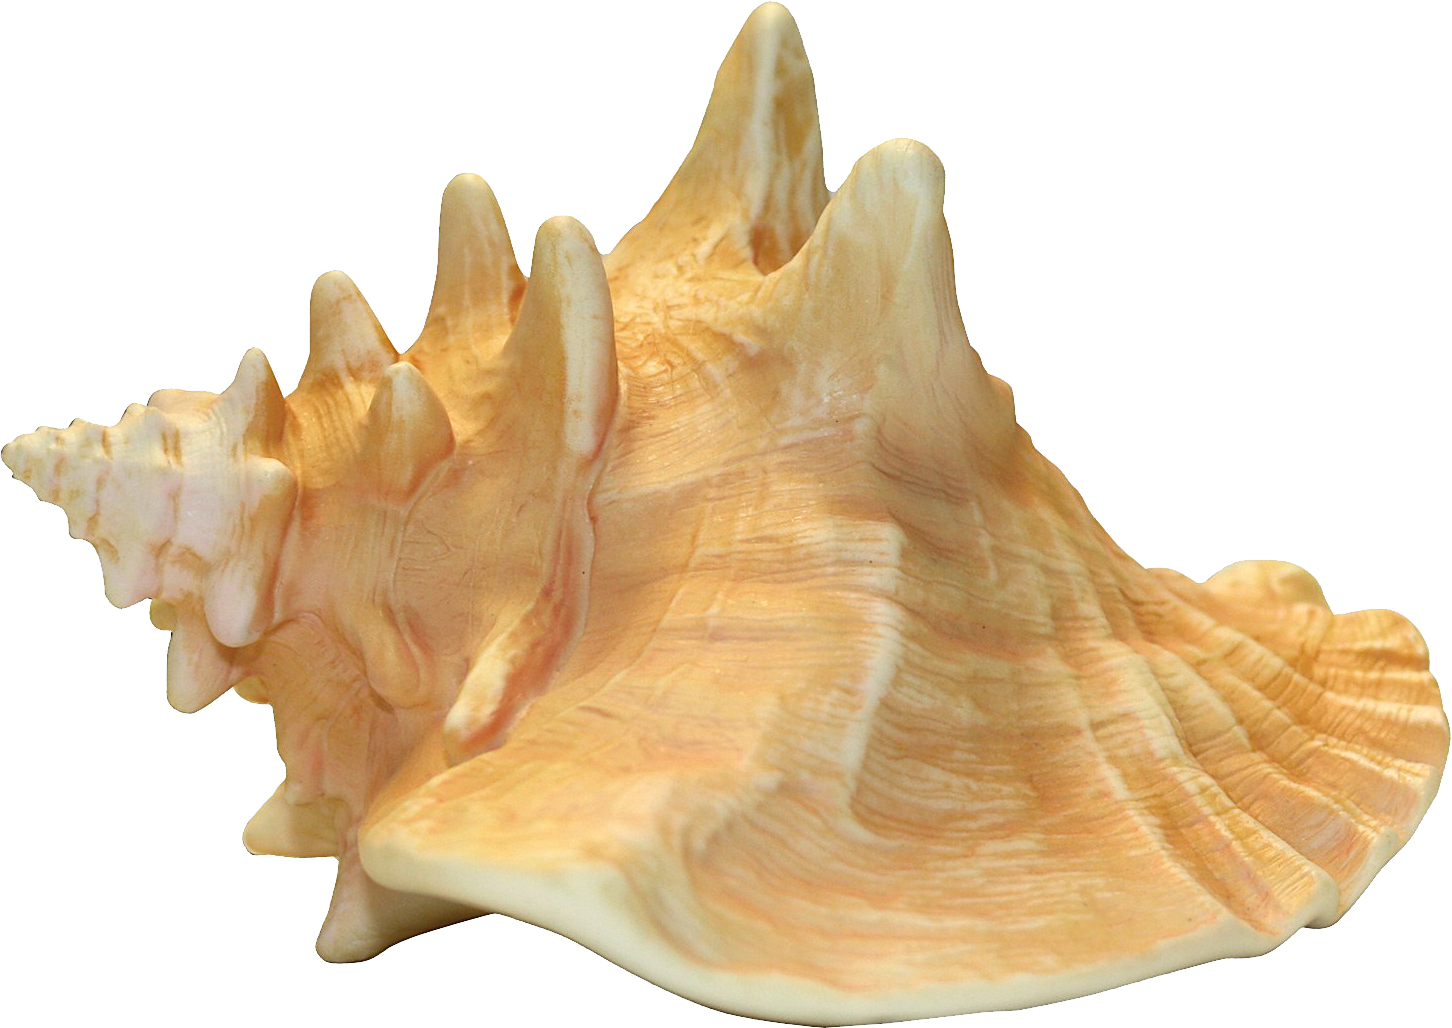 conch